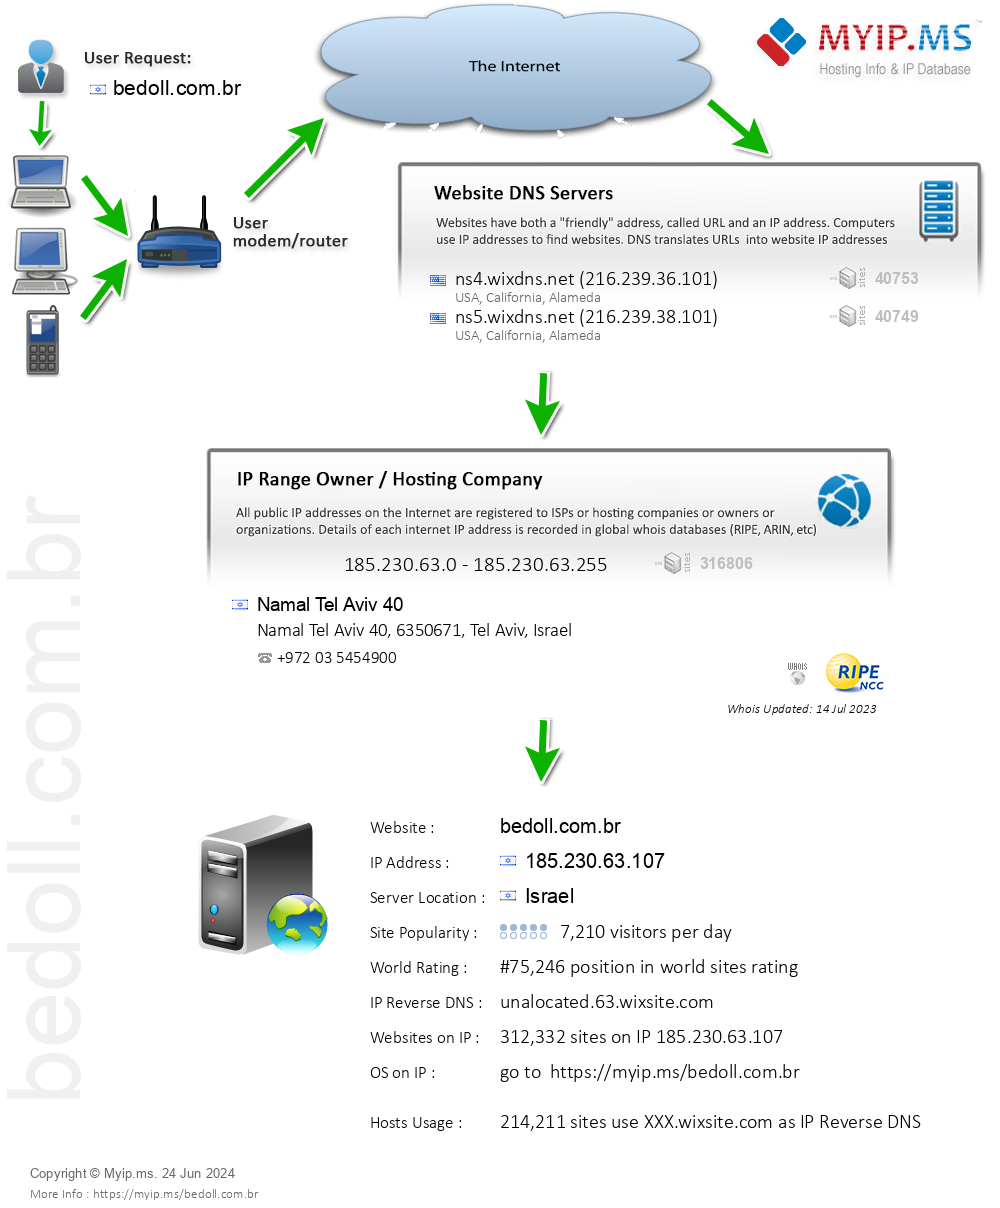 Bedoll.com.br - Website Hosting Visual IP Diagram